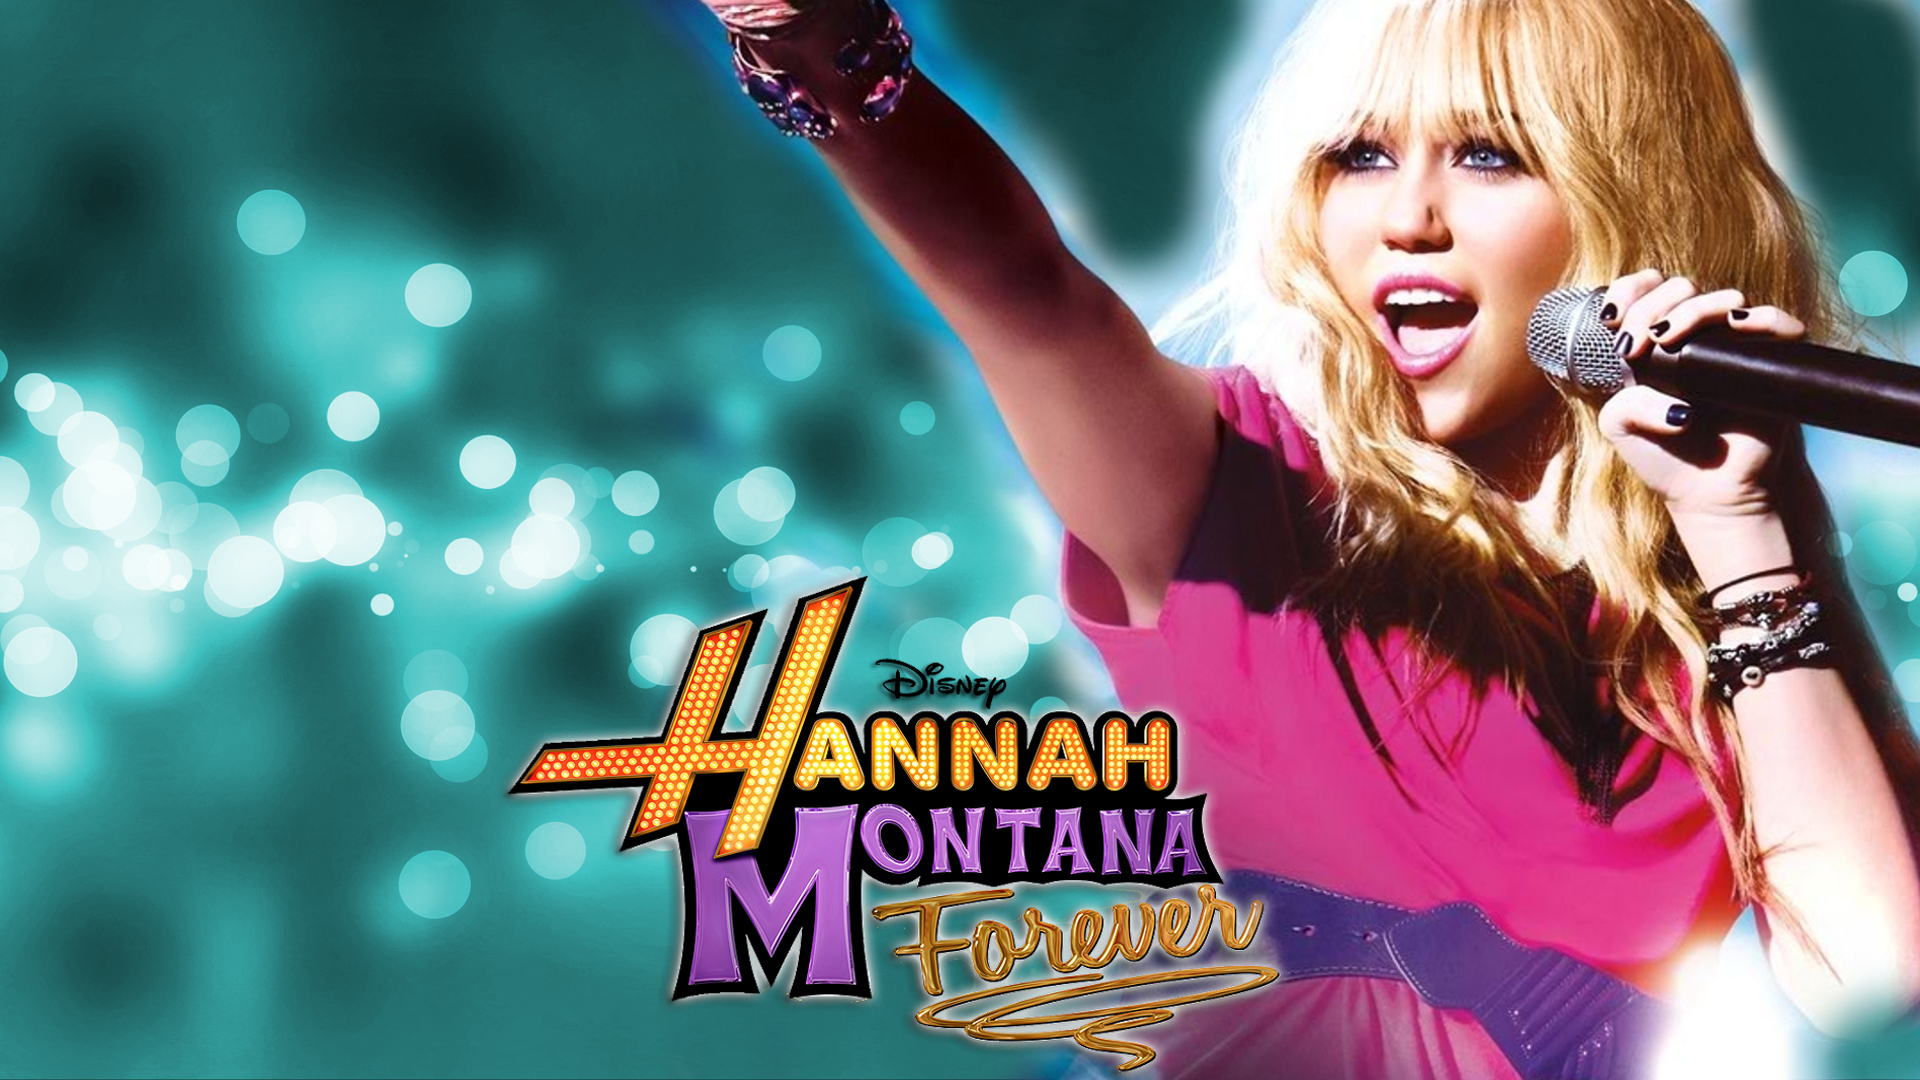 Hannah montana forever - Hannah Montana Wallpaper 31830427 - Fanpop